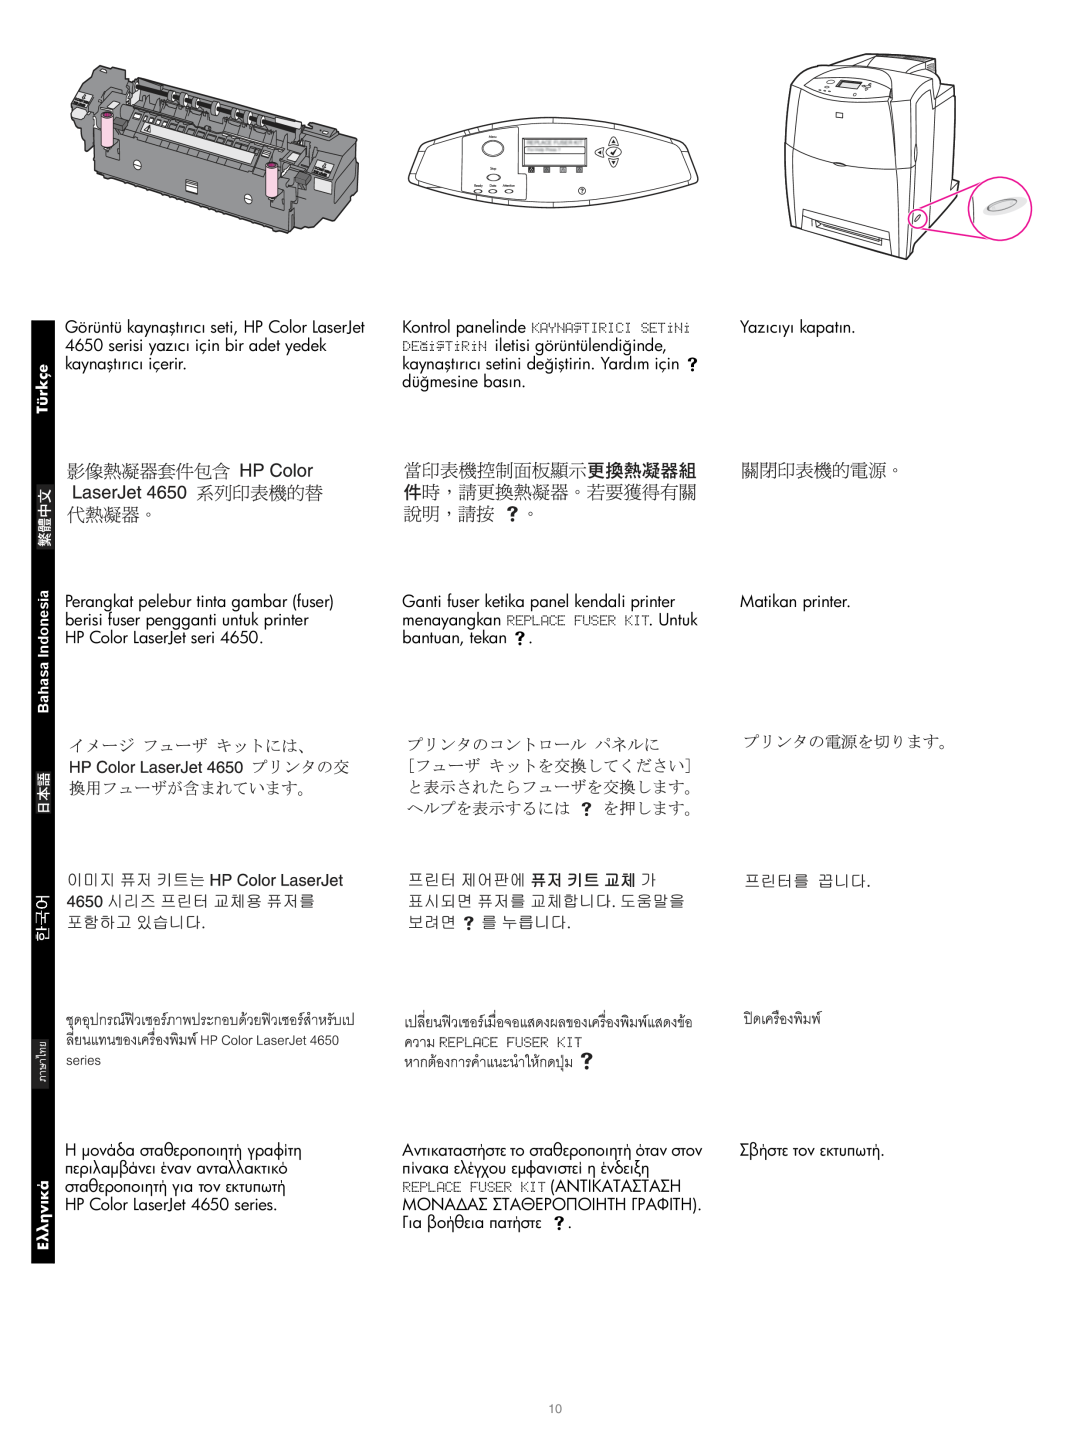 HP Q3676A 110V Image Fuser Kit, Q3677A 220V Image Fuser Kit, Q3675A Image Transfer Kit manual µ HP Color LaserJet 4650 series 